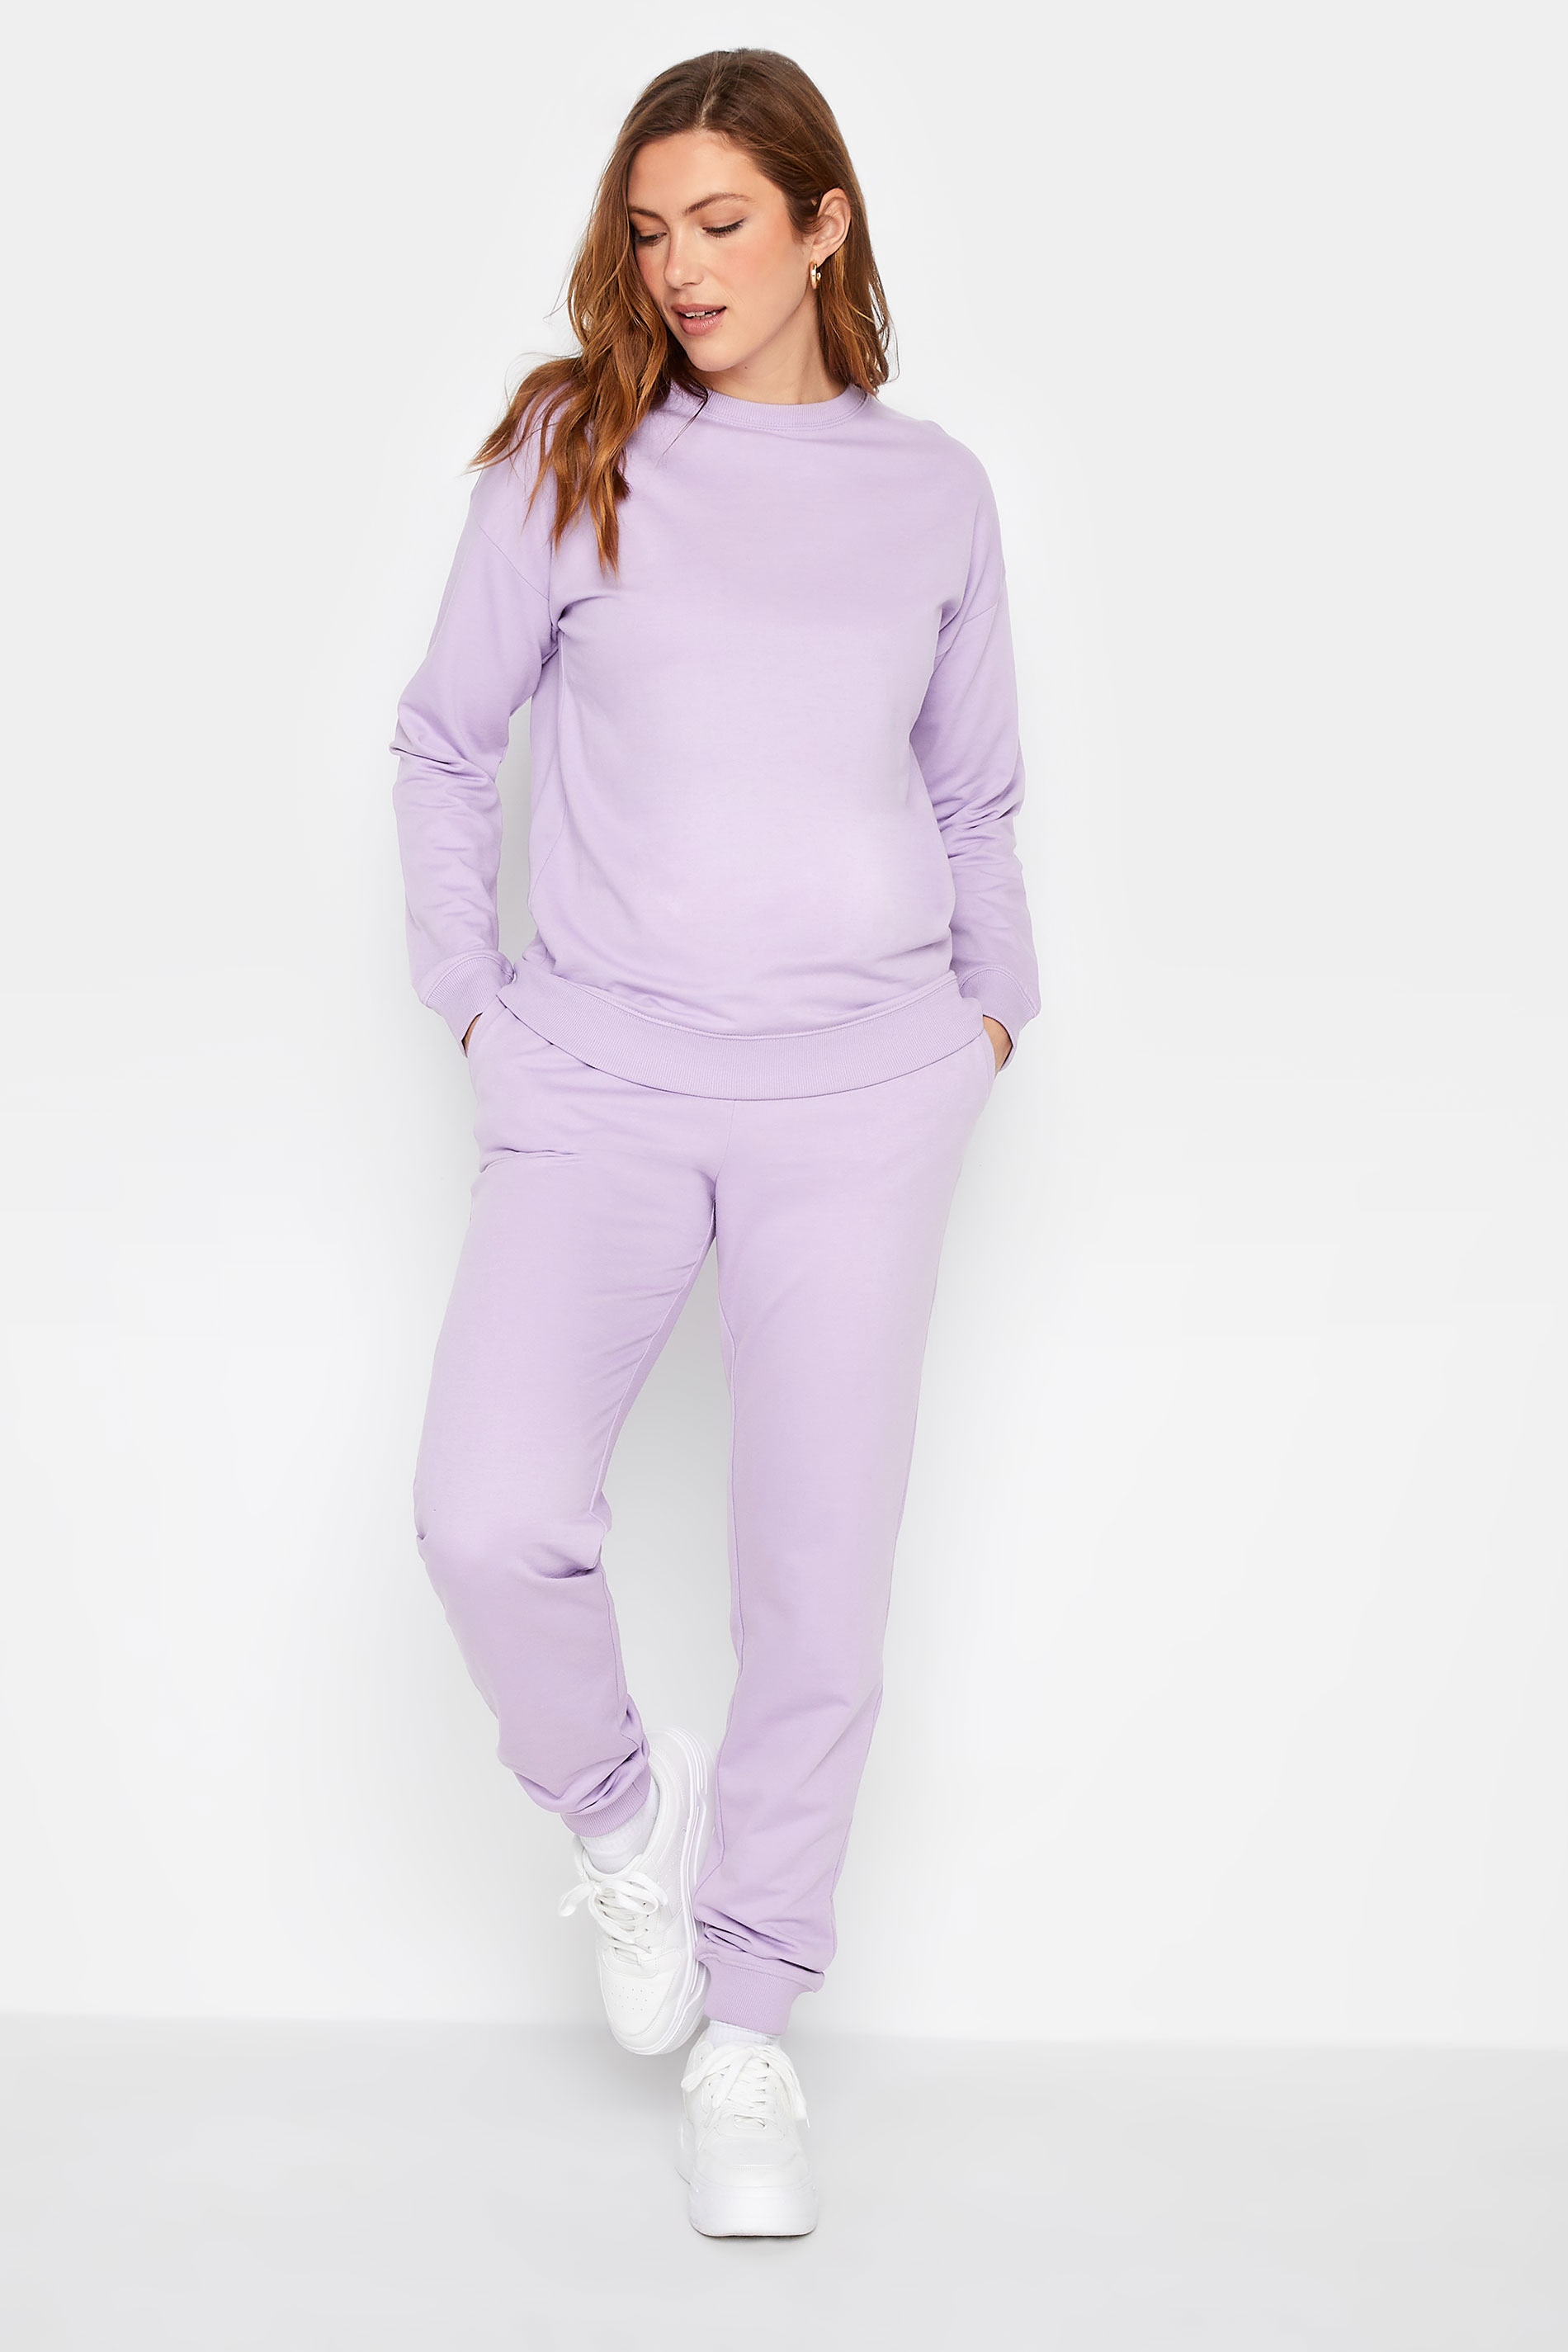 LTS Tall Lilac Purple Long Sleeve Sweatshirt | Long Tall Sally  2